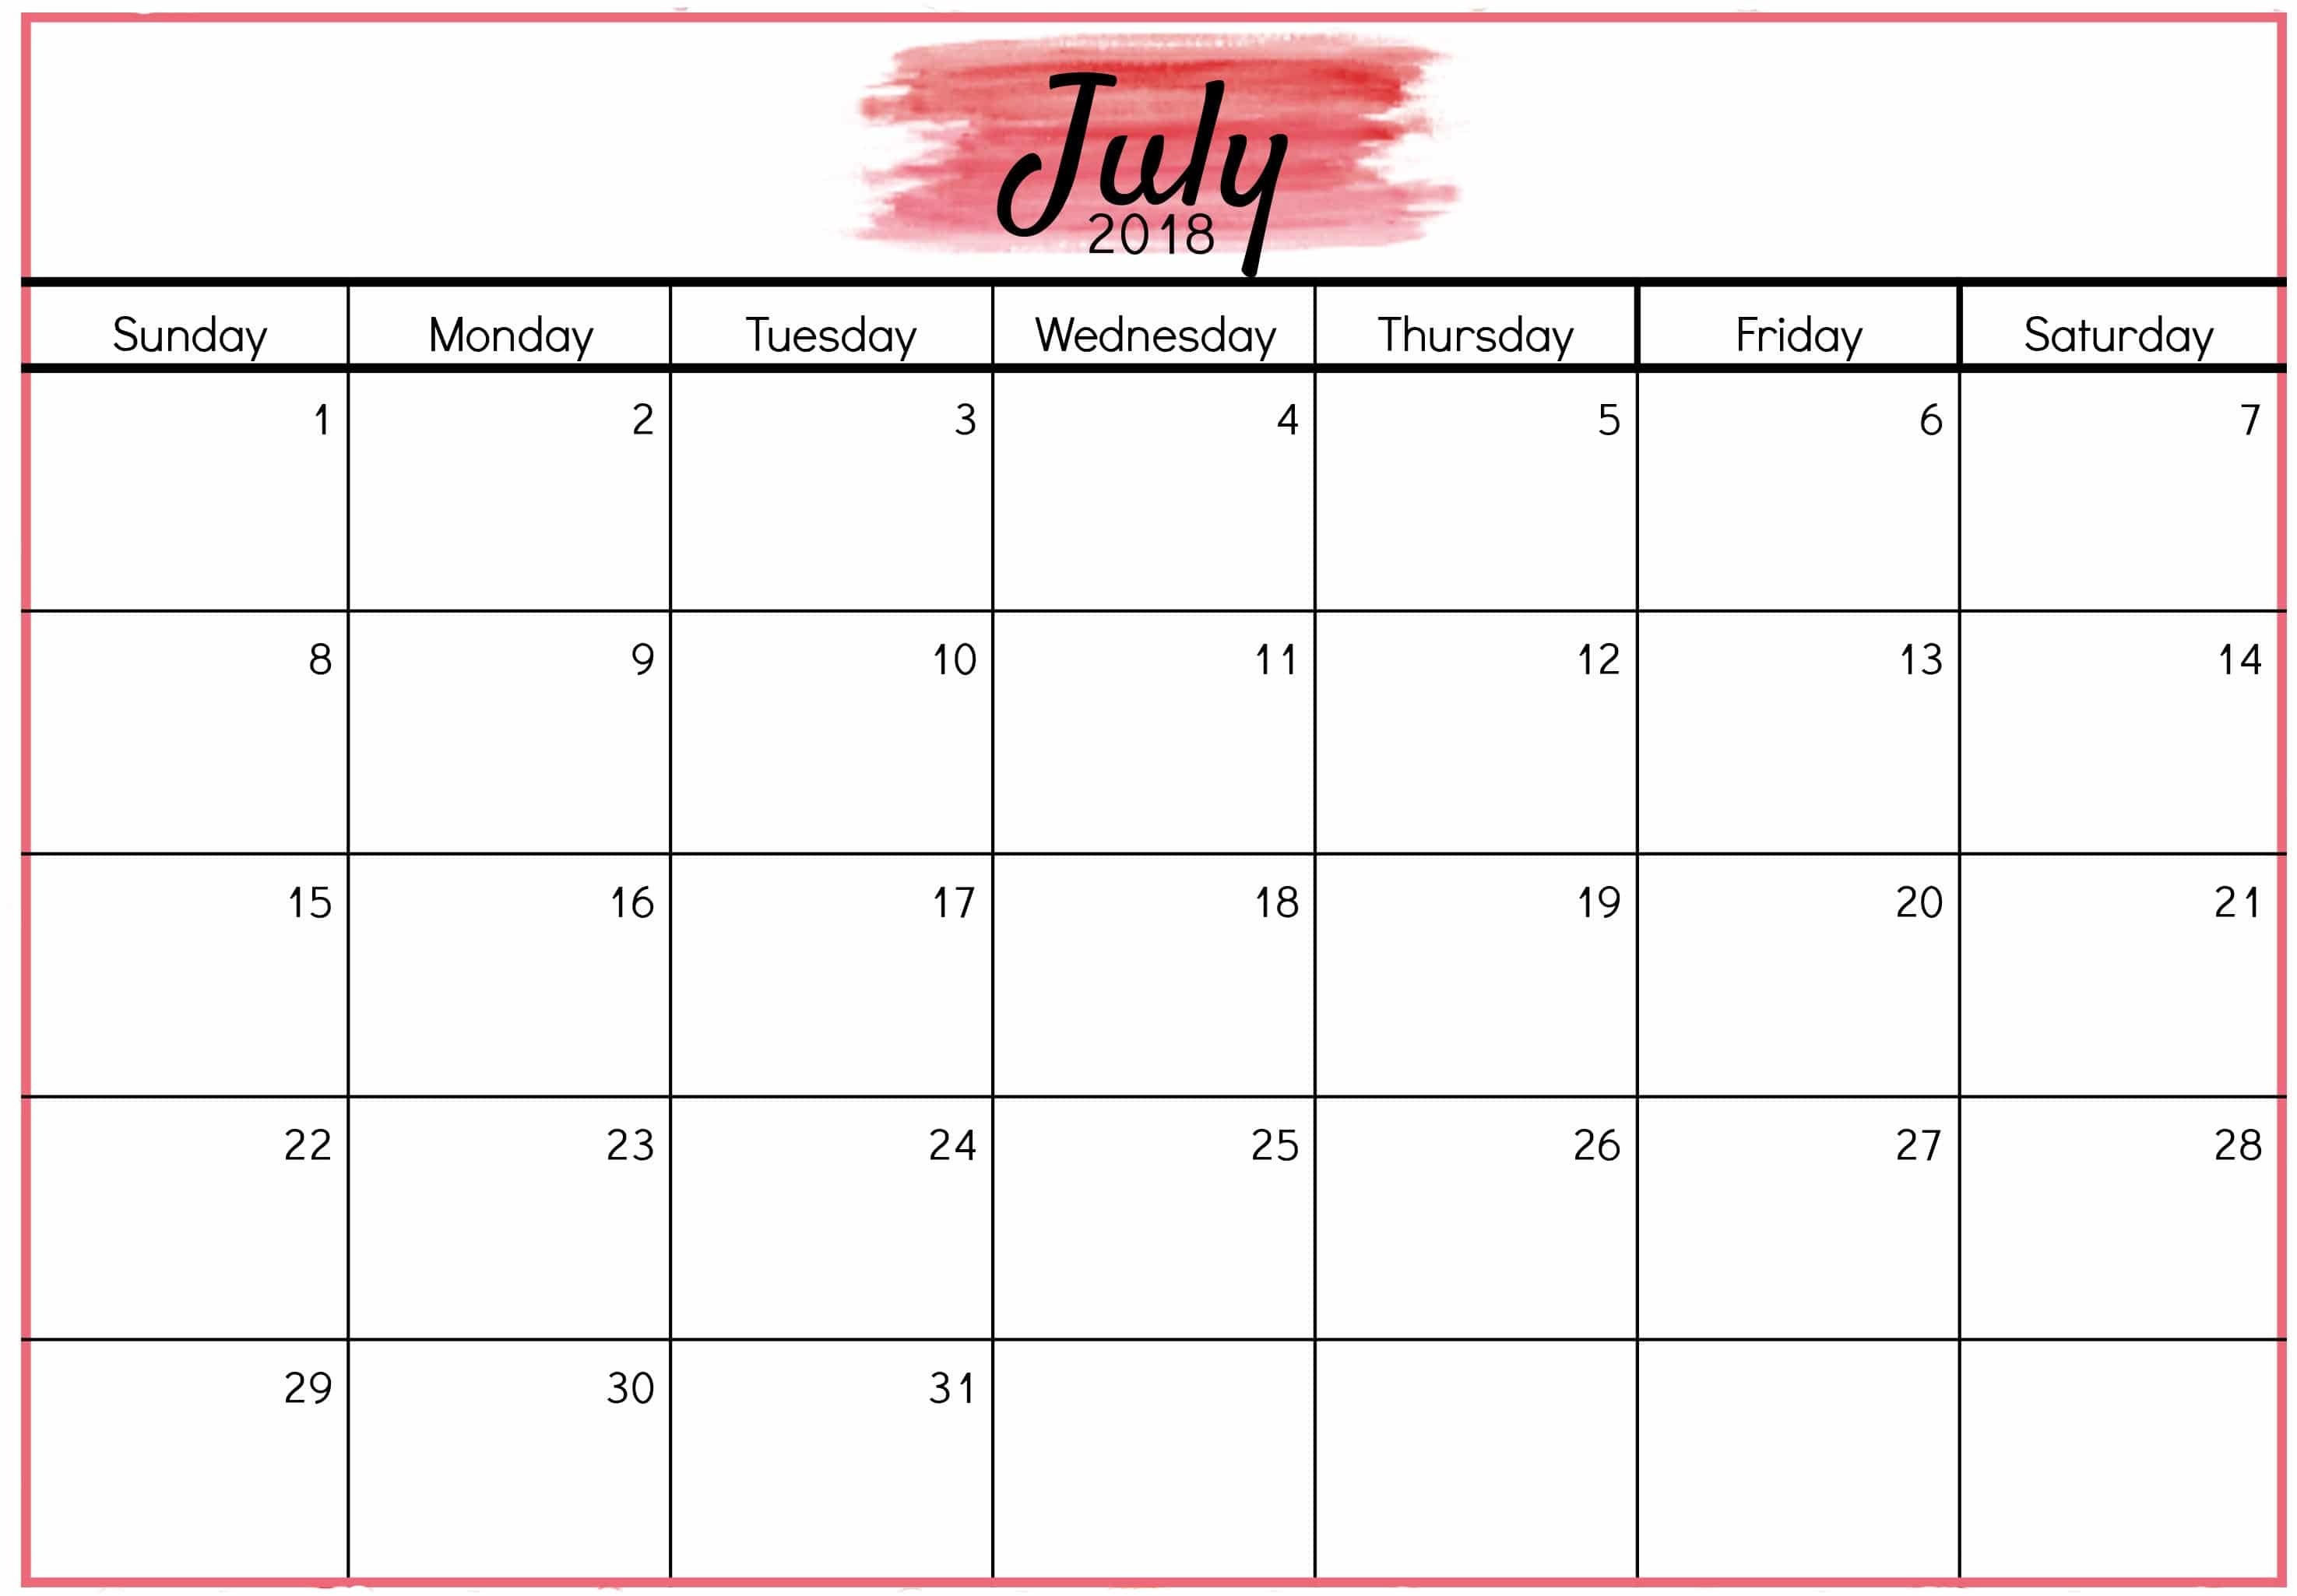 Print July 2018 Calendar 